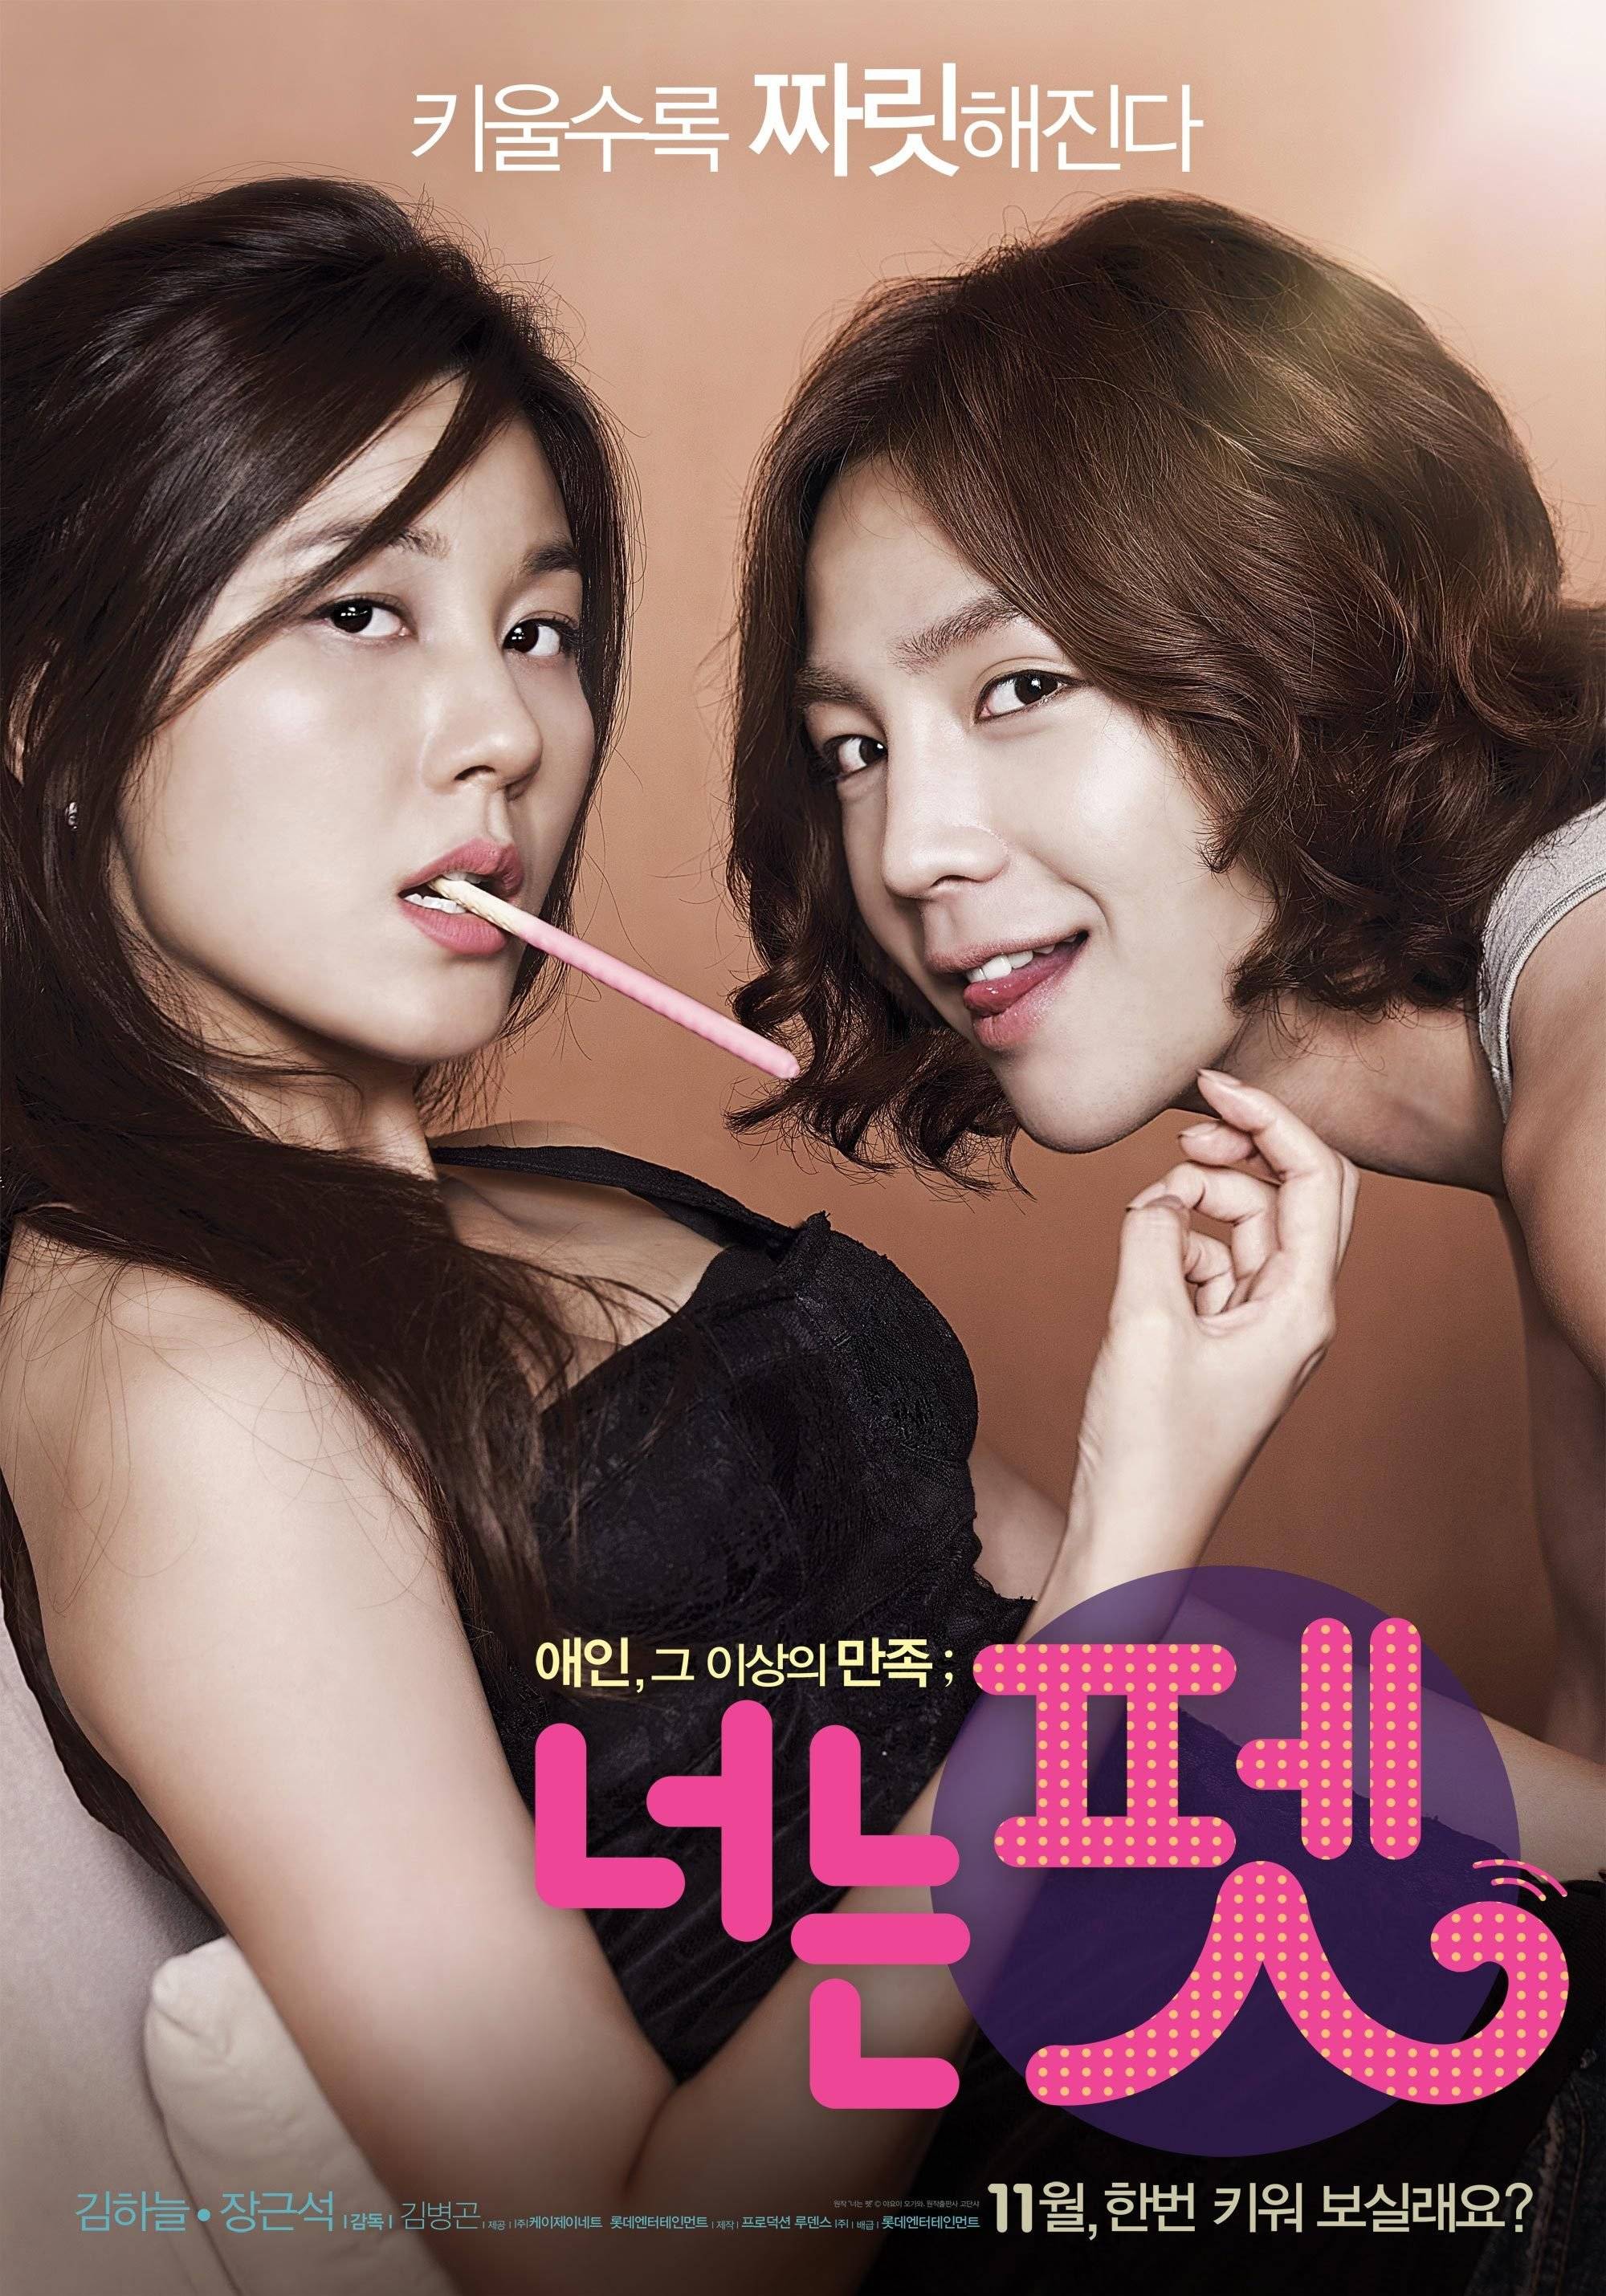 Korean Movies Opening Today 2